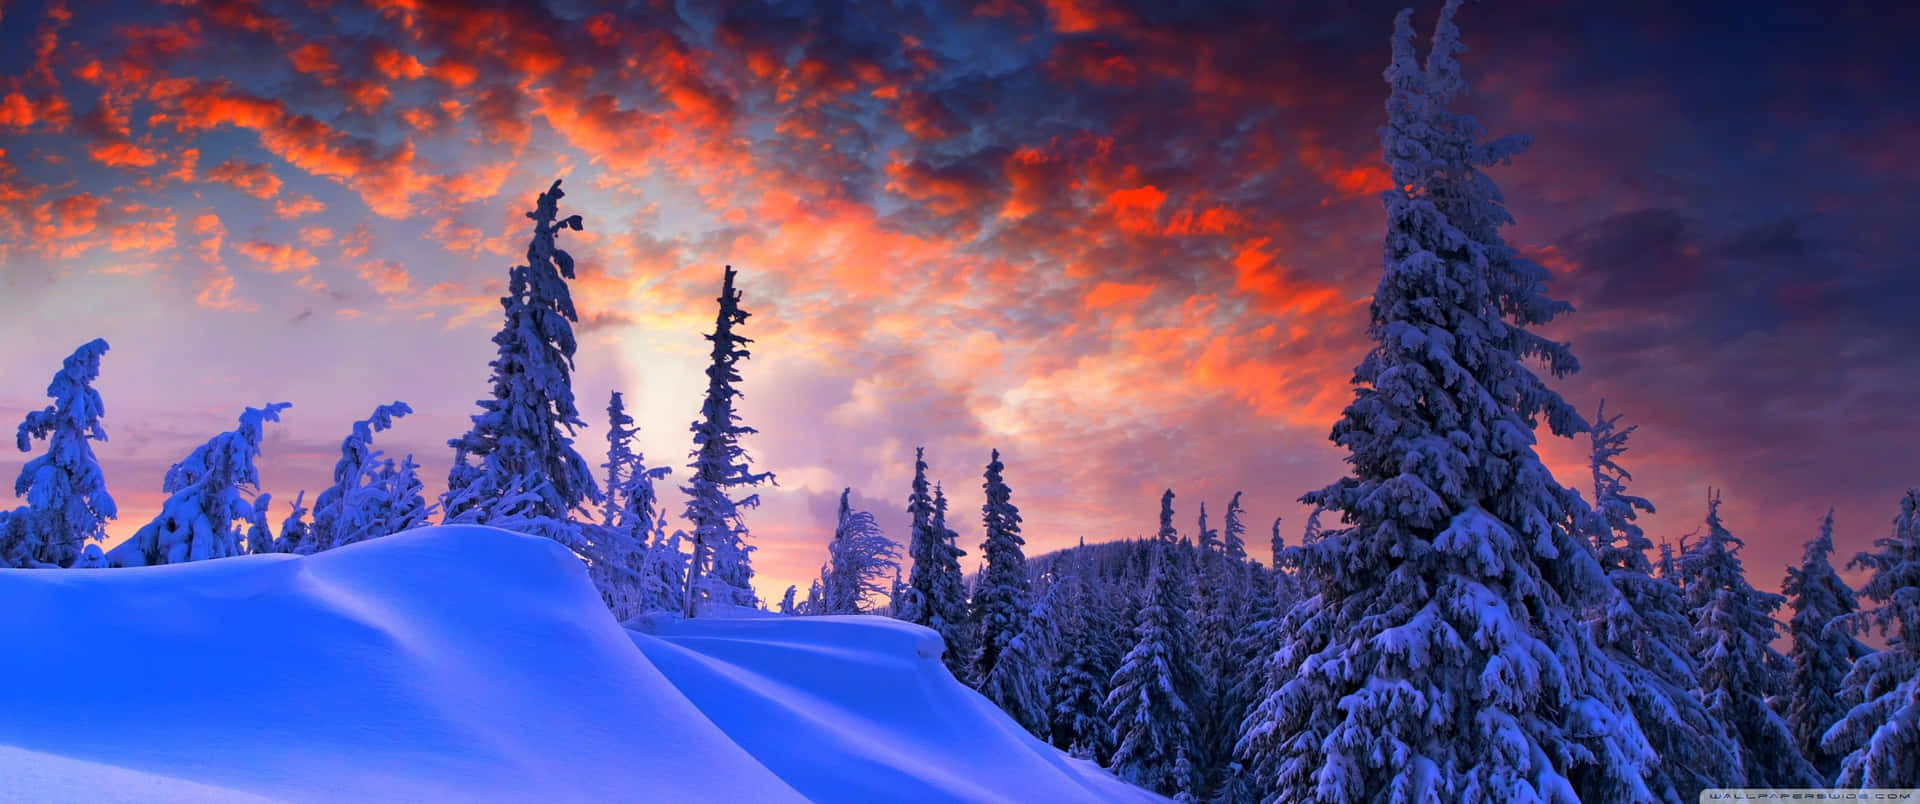 Explore Nature's Beauty in a 3440x1440 Winter Wonderland Wallpaper